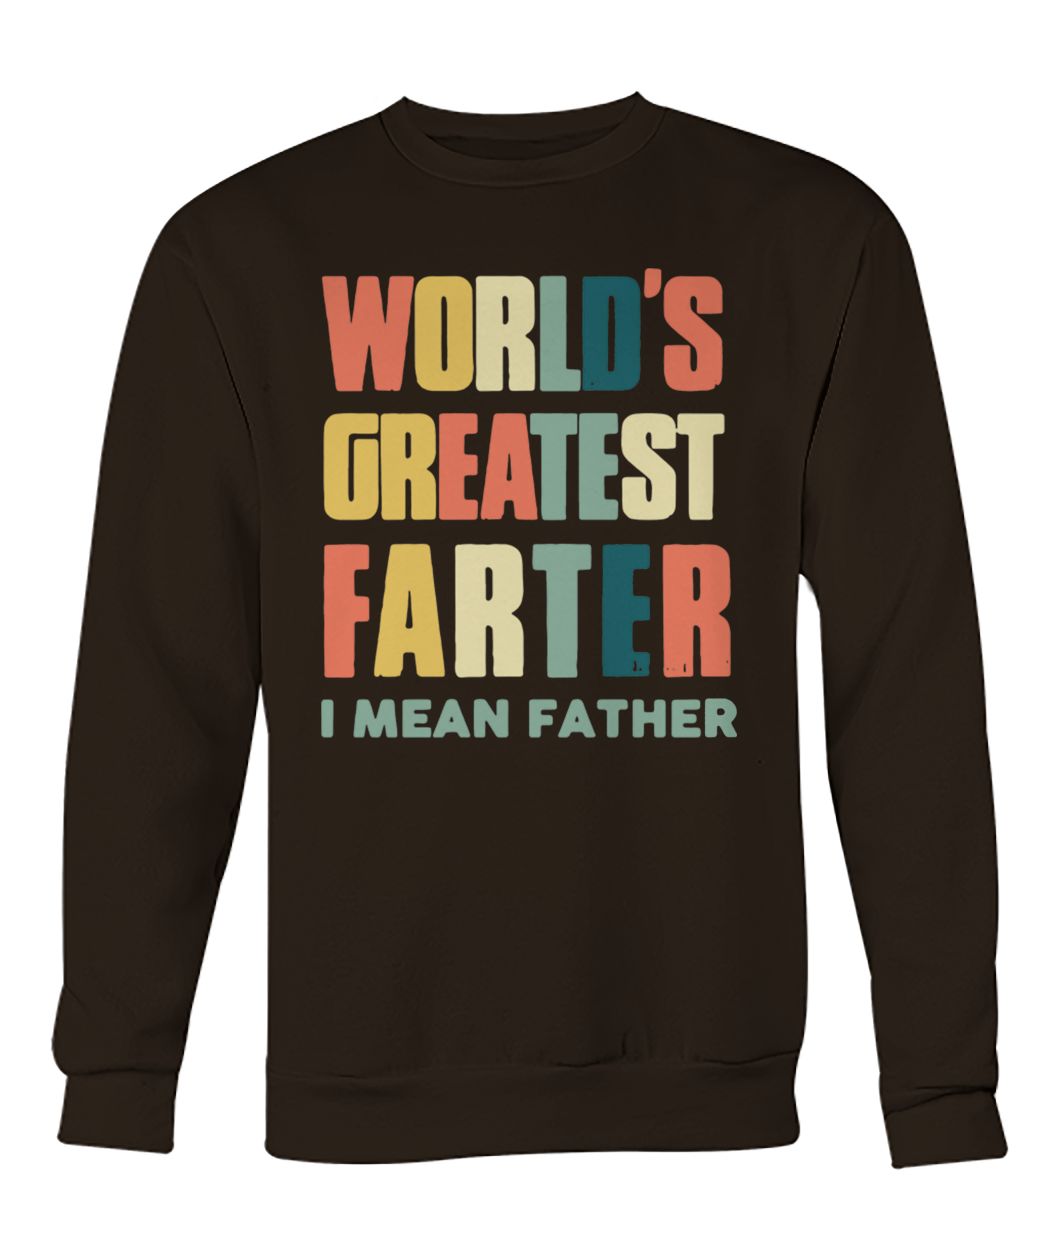 Vintage world's greatest farter I mean father crew neck sweatshirt